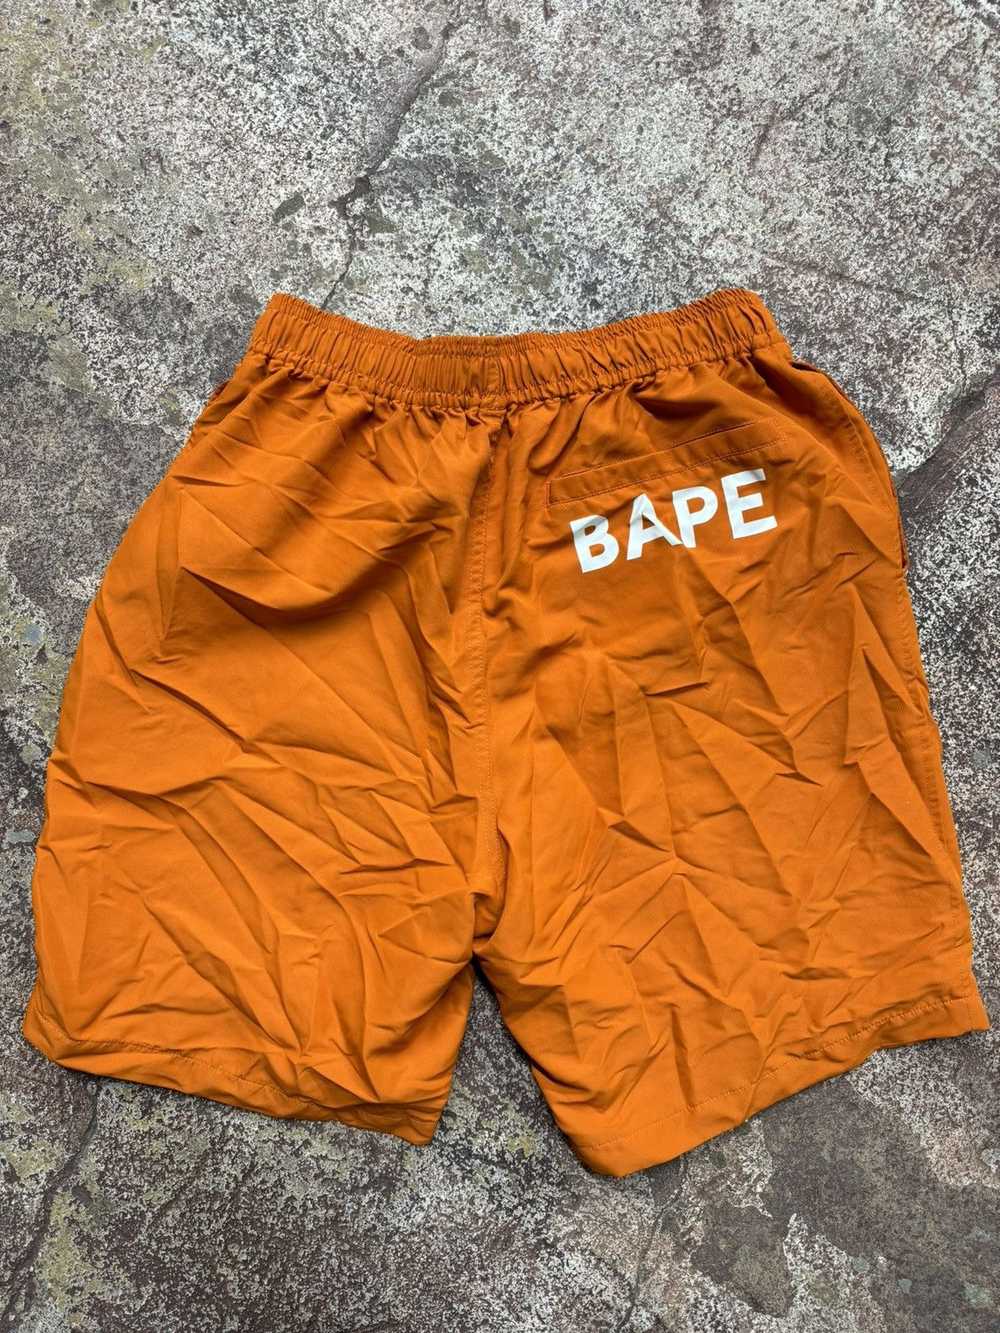 Bape Bape trunks - image 3